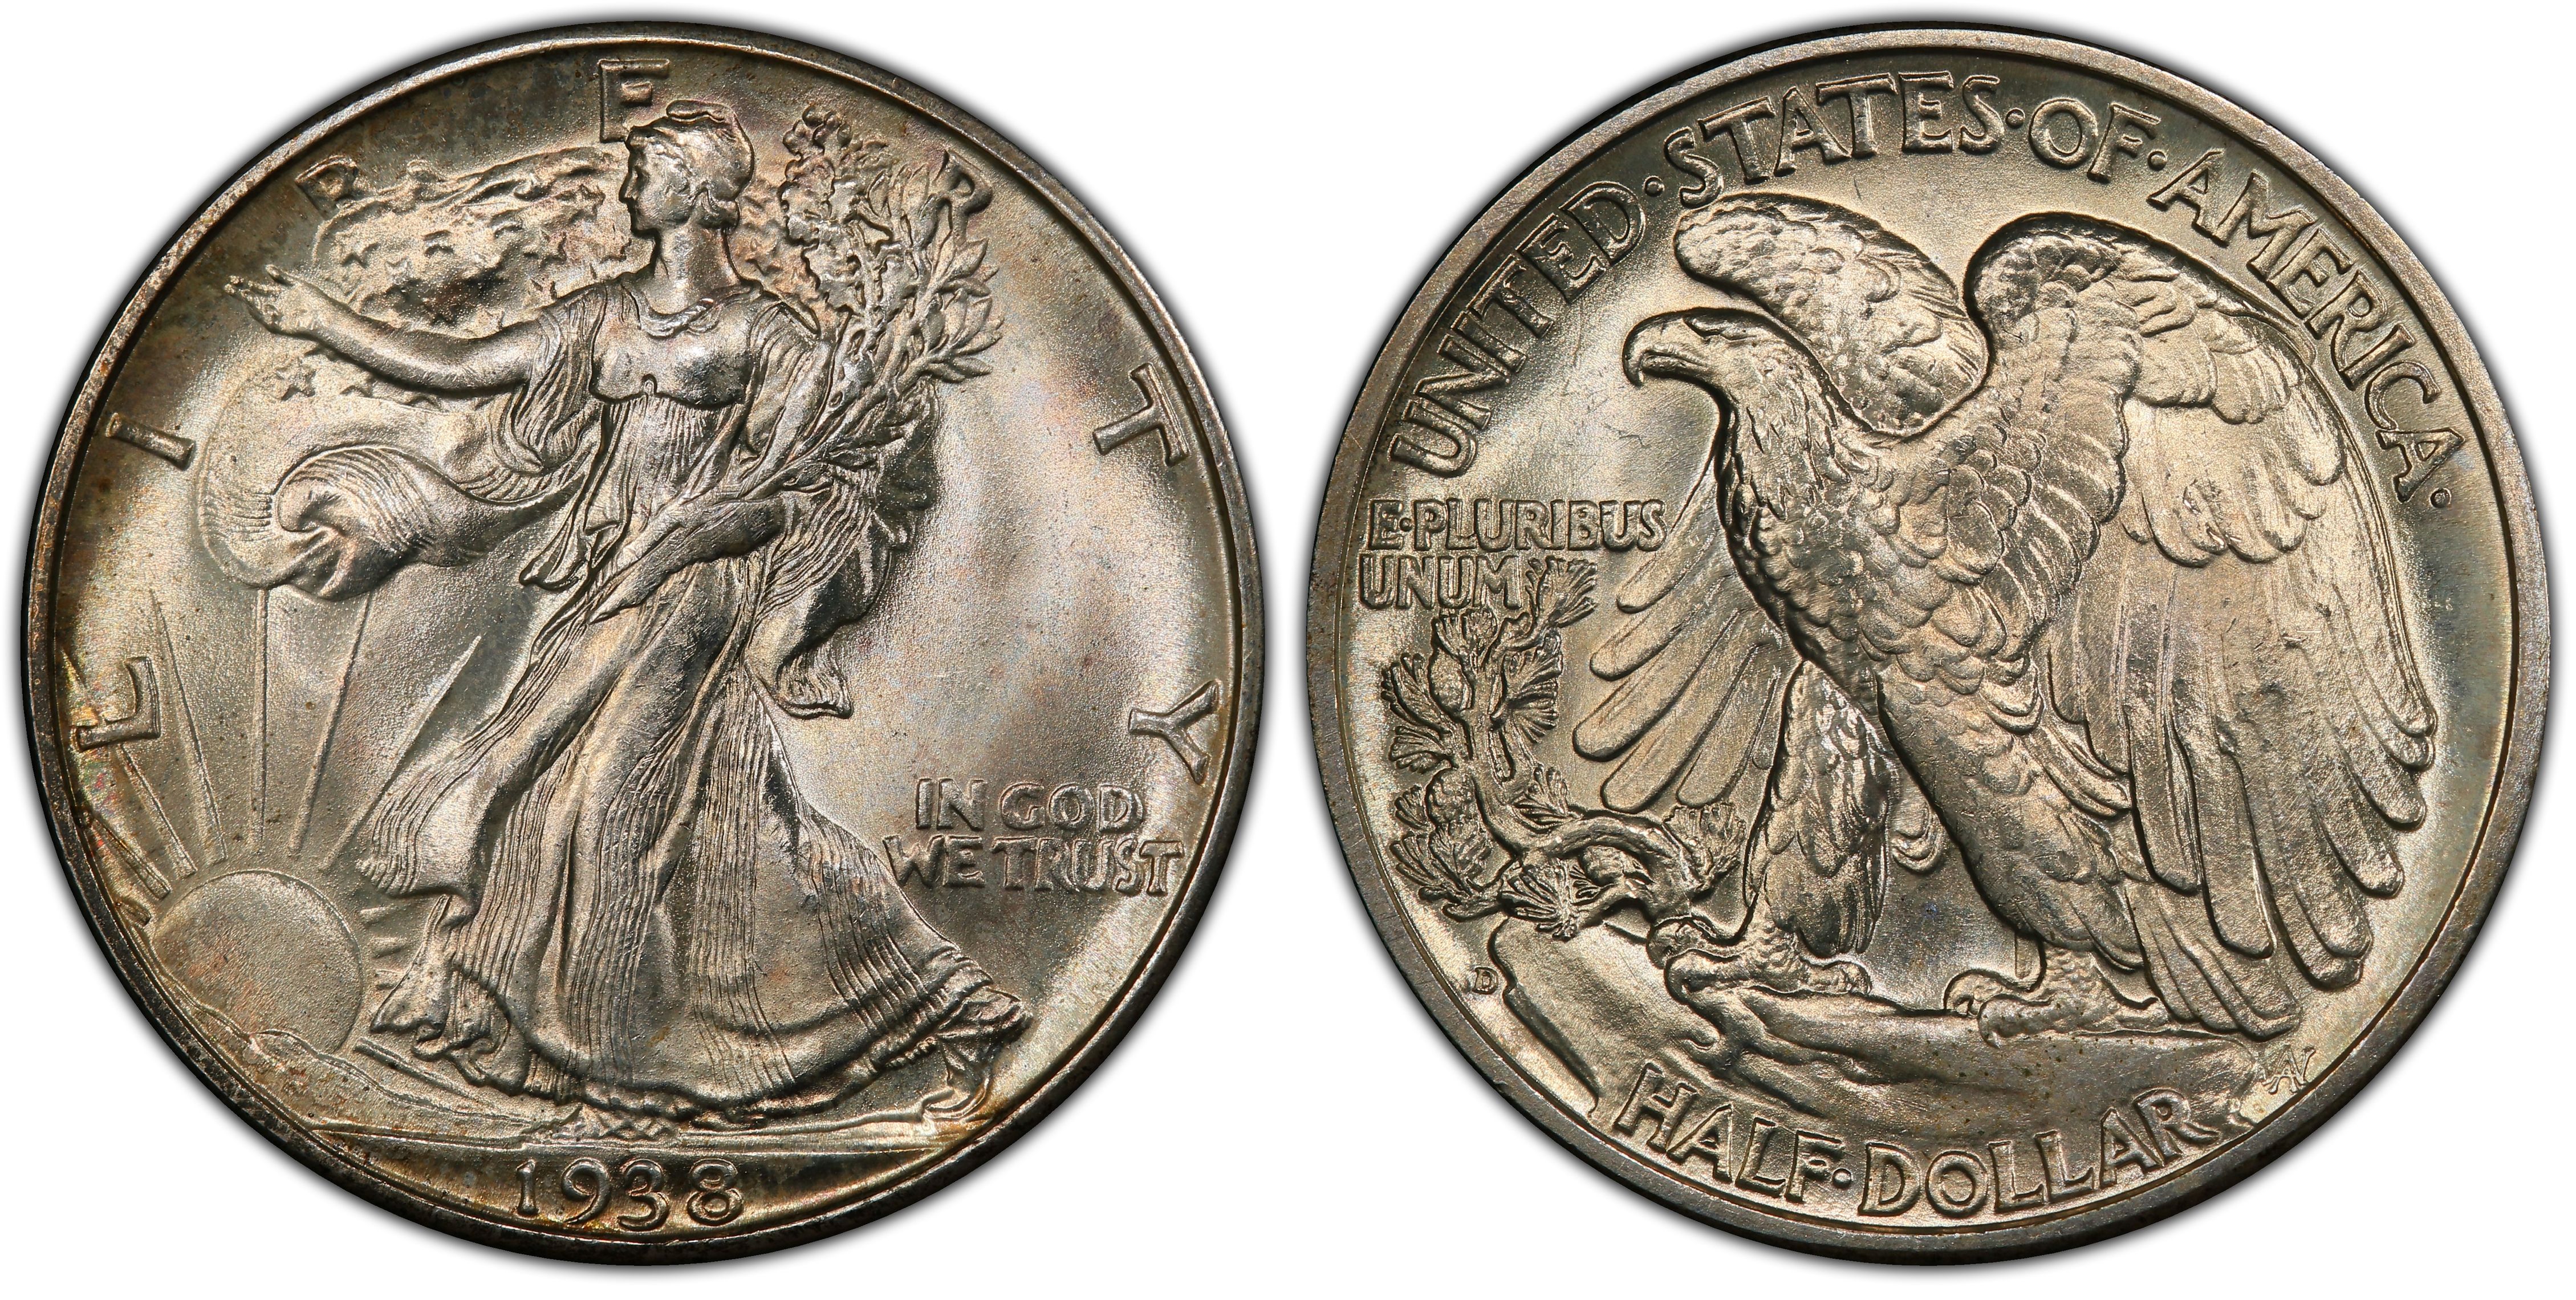 1946 D 50c Liberty Walking Silver Half Dollar US Coin F Fine